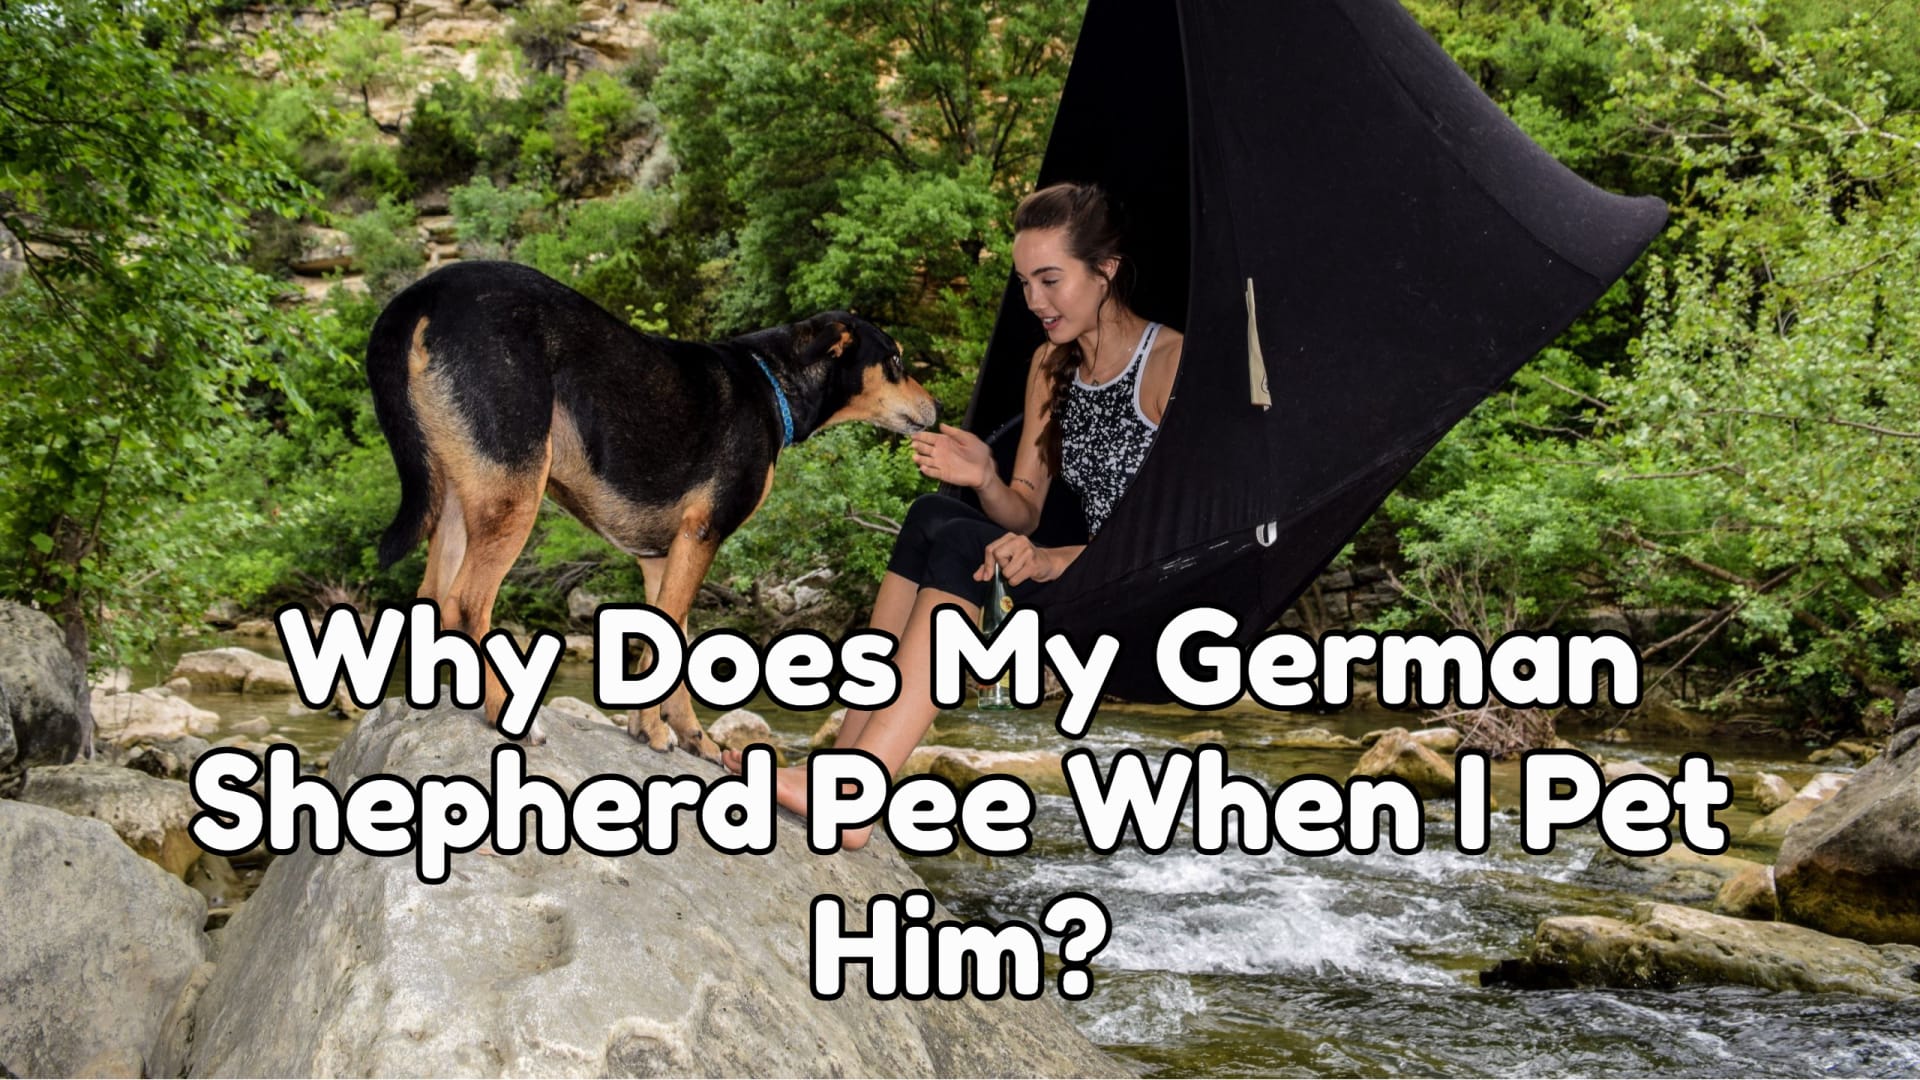 Why Does My German shepherd Pee When I Pet Him?